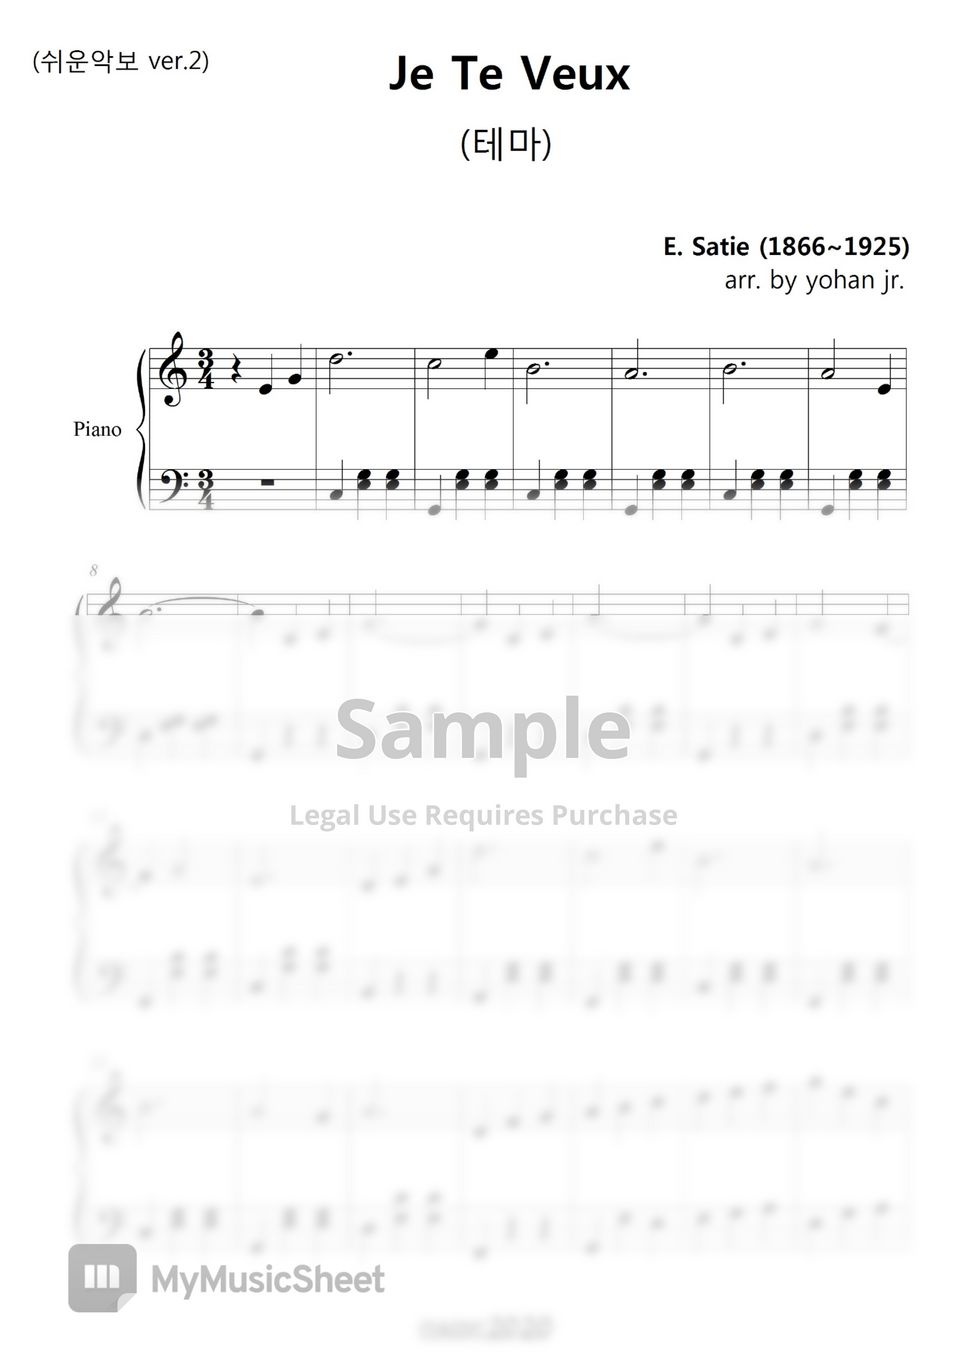 E. Satie - Je Te Veux (easy piano ver.2) by classic2020